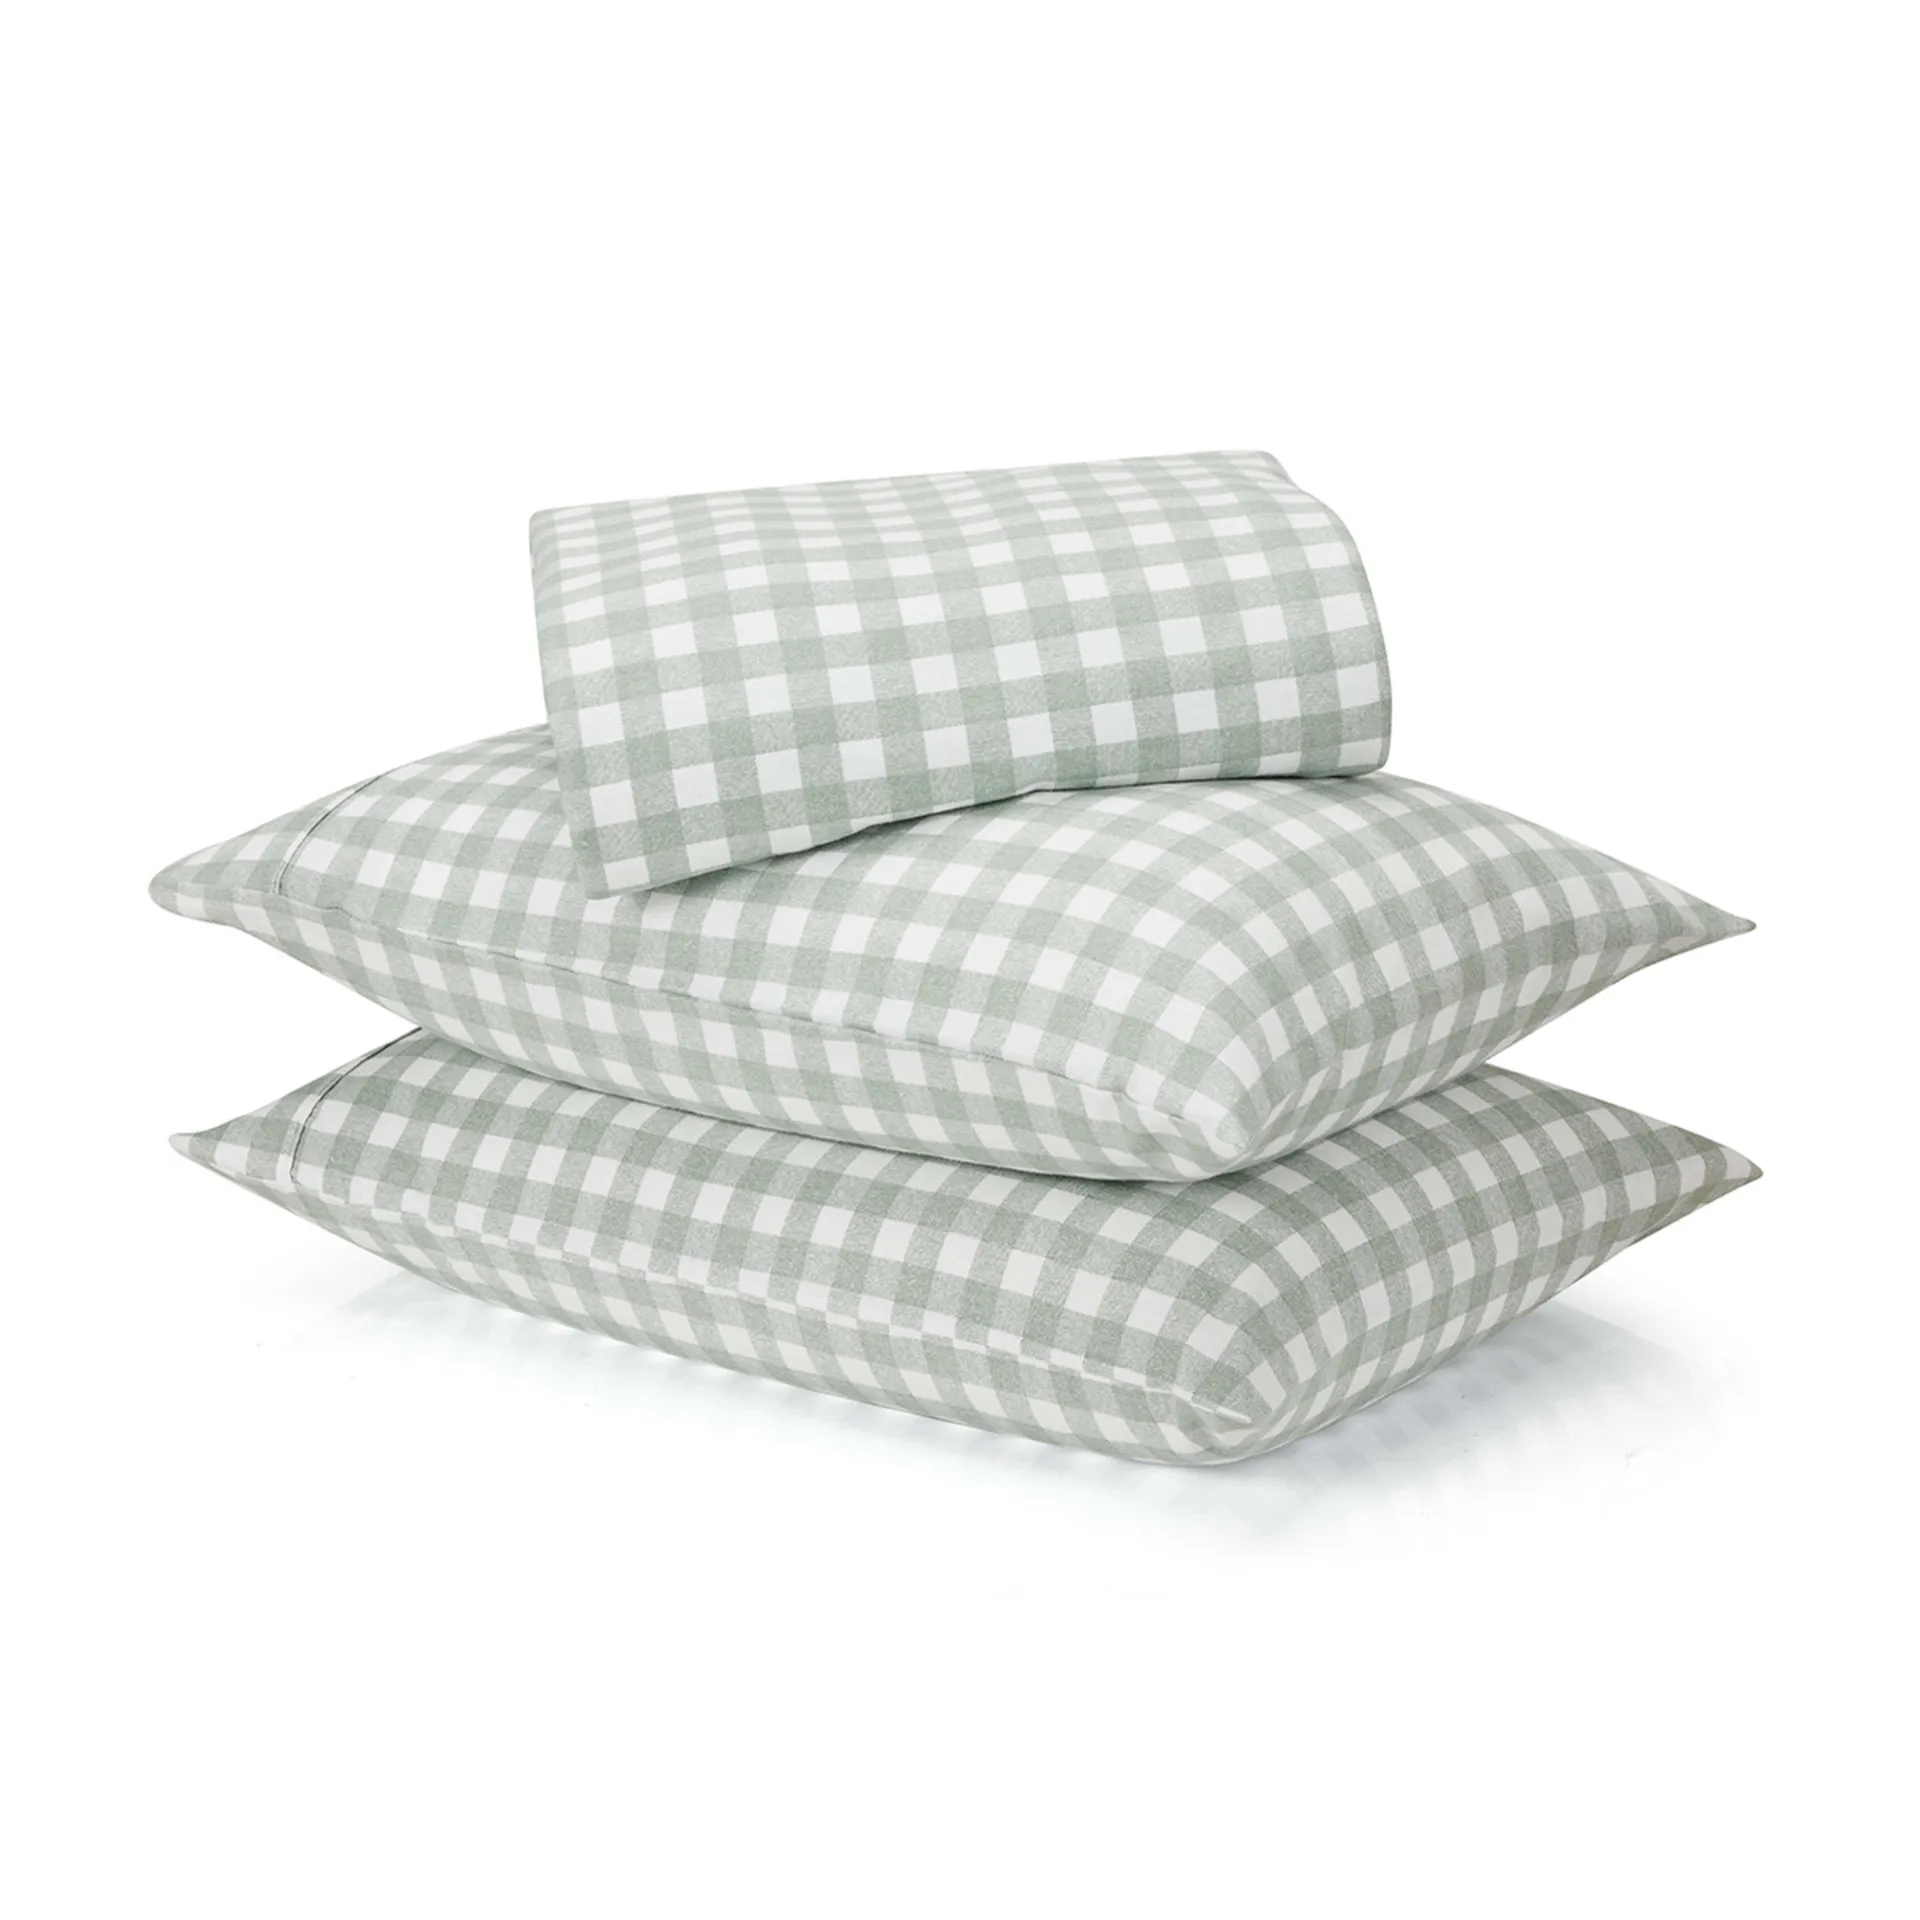 Gingham Cotton Flannelette Sheet Set - King Bed, Green